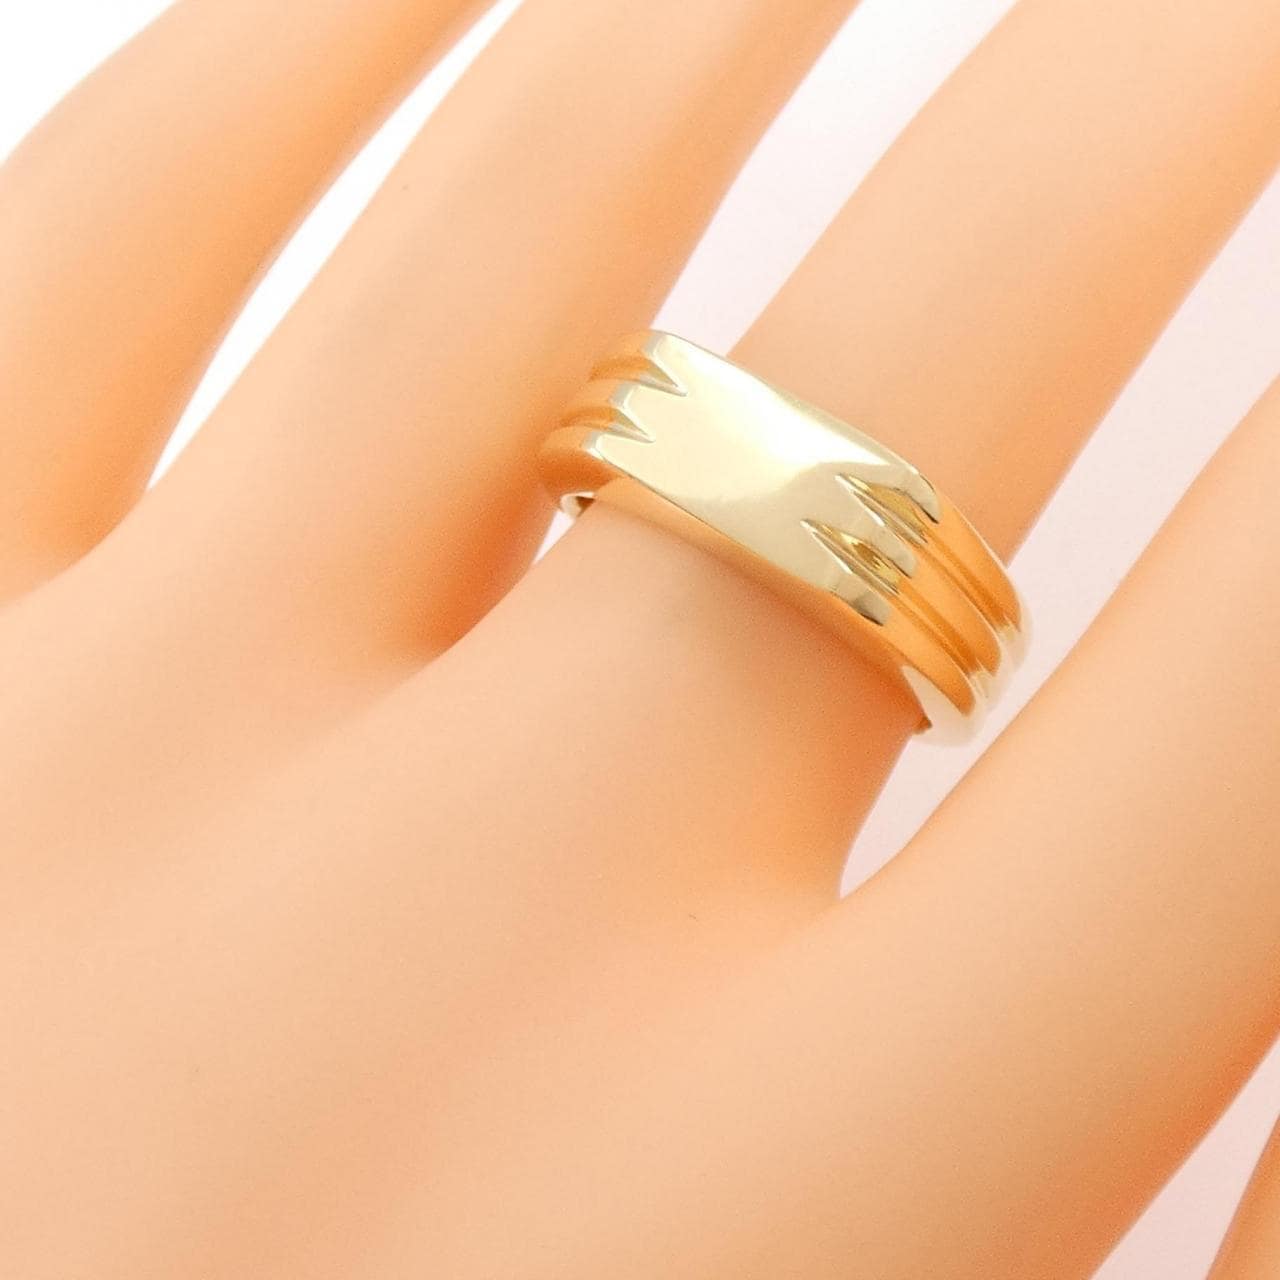 [BRAND NEW] K18YG ring